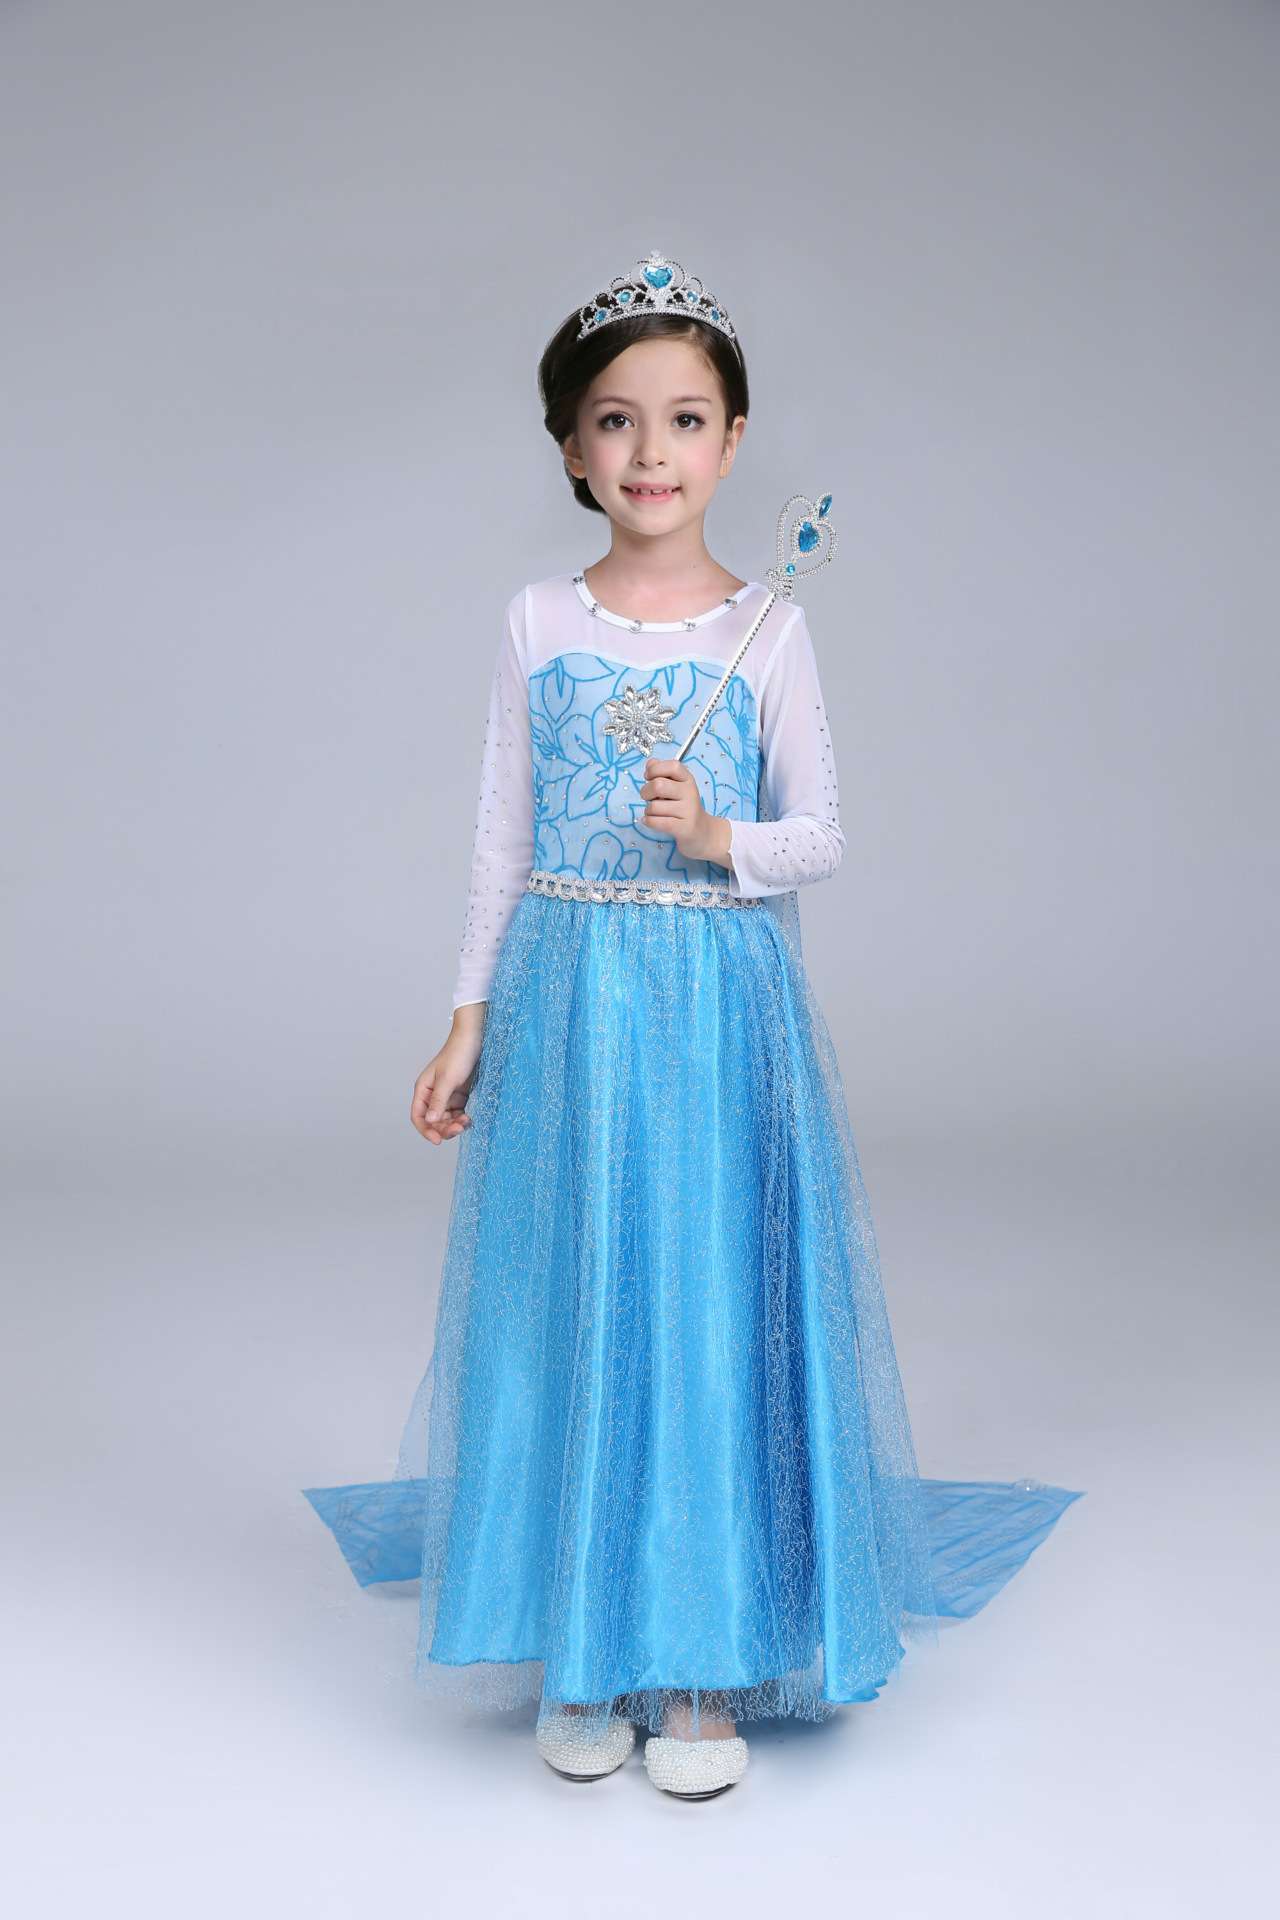 Shop Baby Princess Dress Online - Etsy